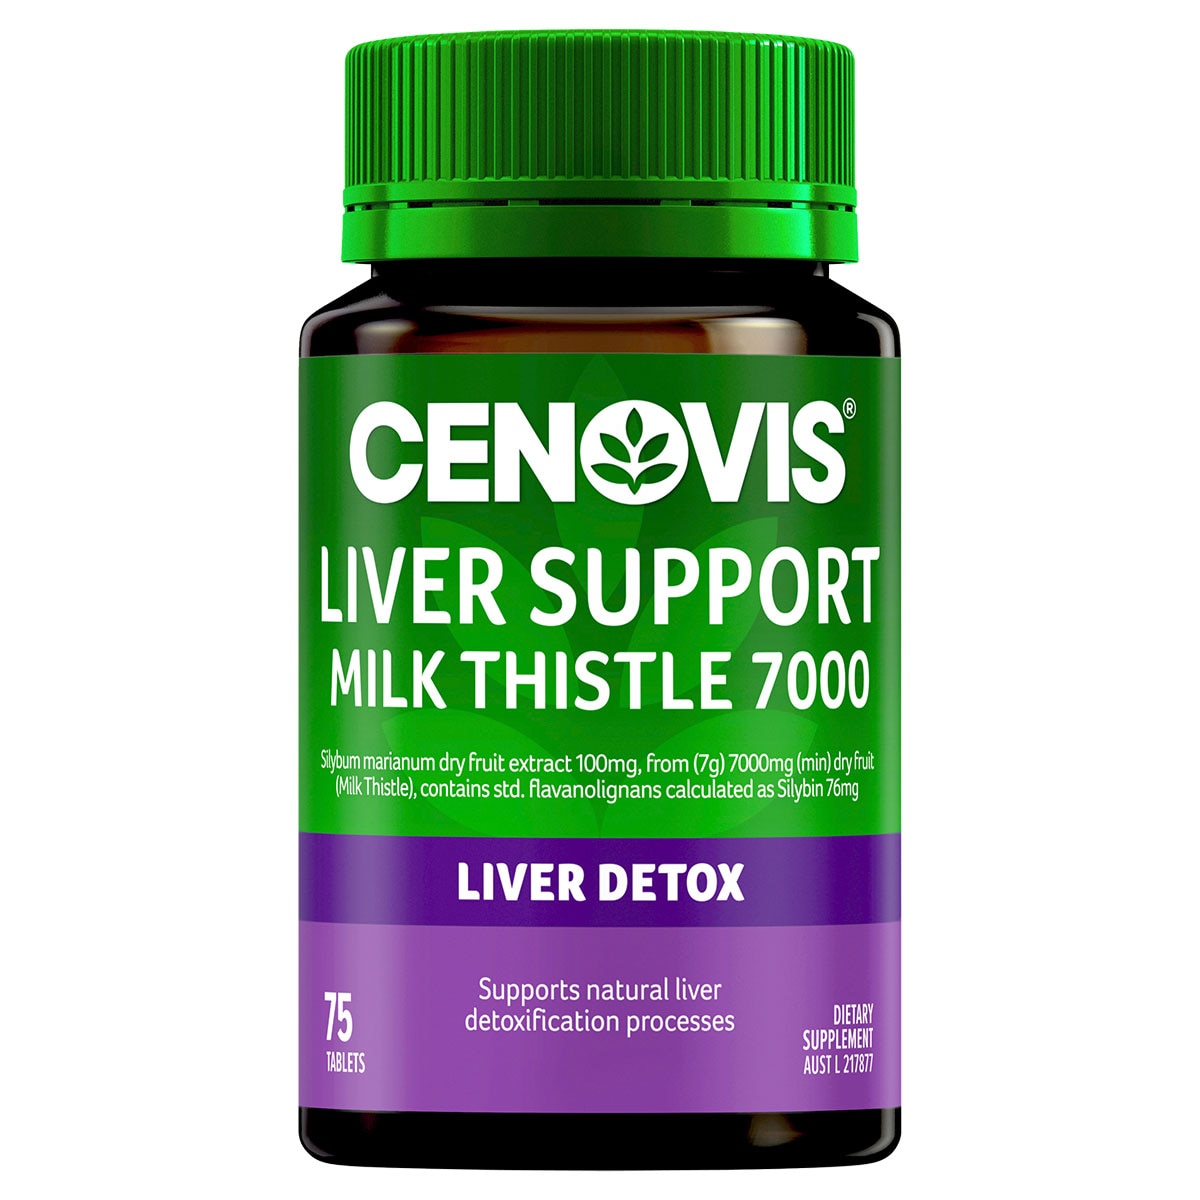 Cenovis Liver Support Milk Thistle 7000mg 75 Tablets